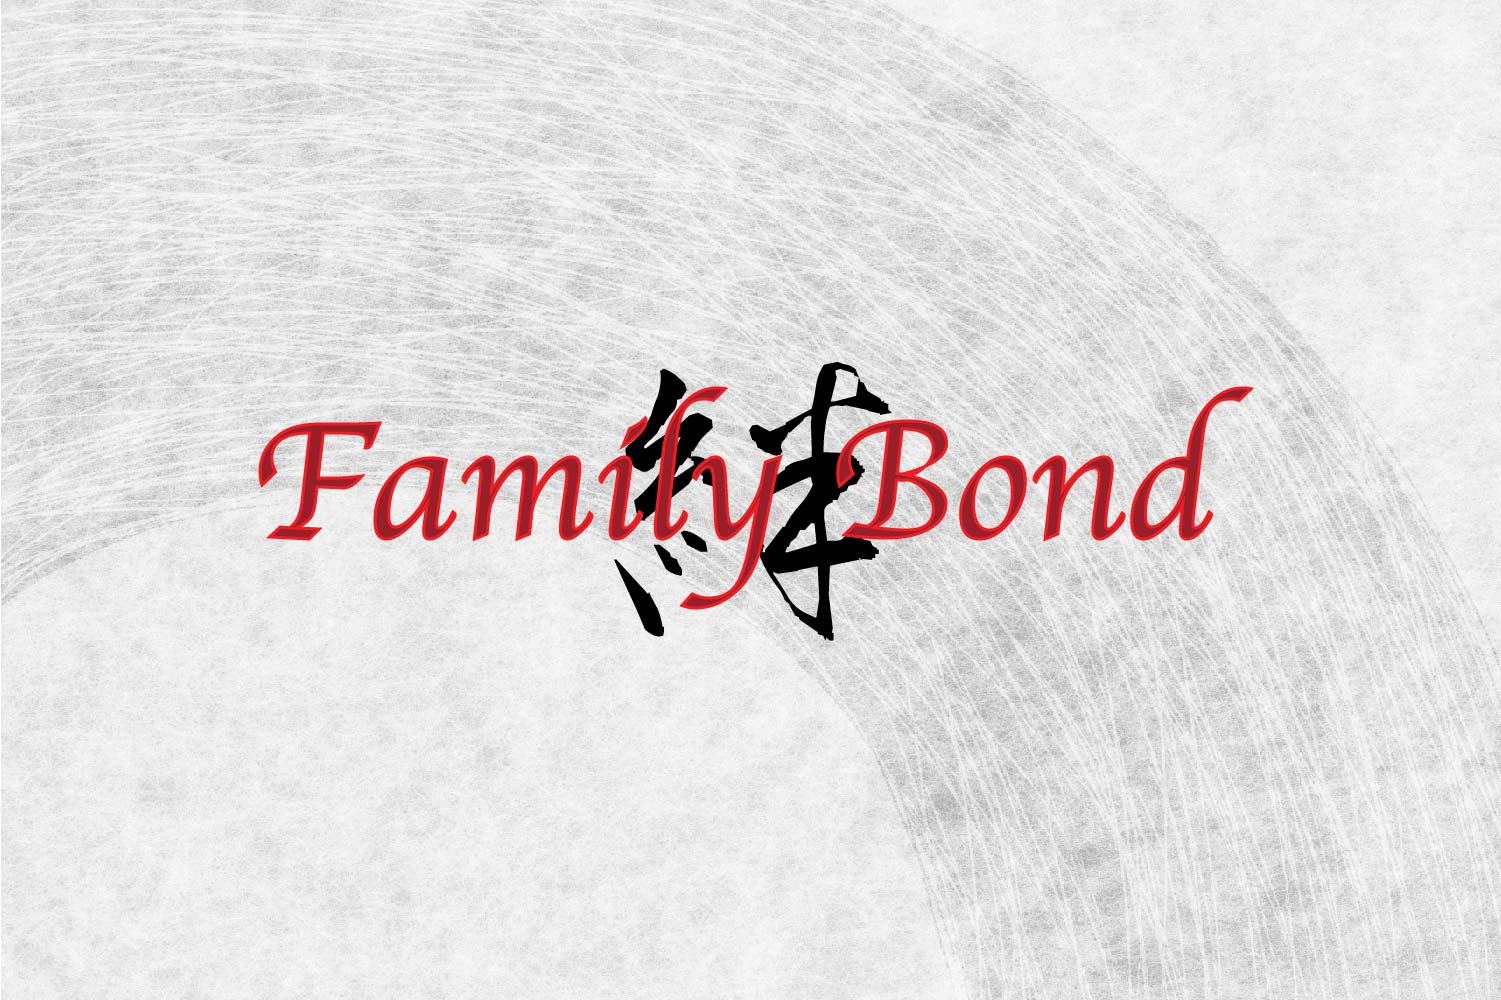 Family Bond Tattoo Idea, Japanese Kanji symbol for Bond